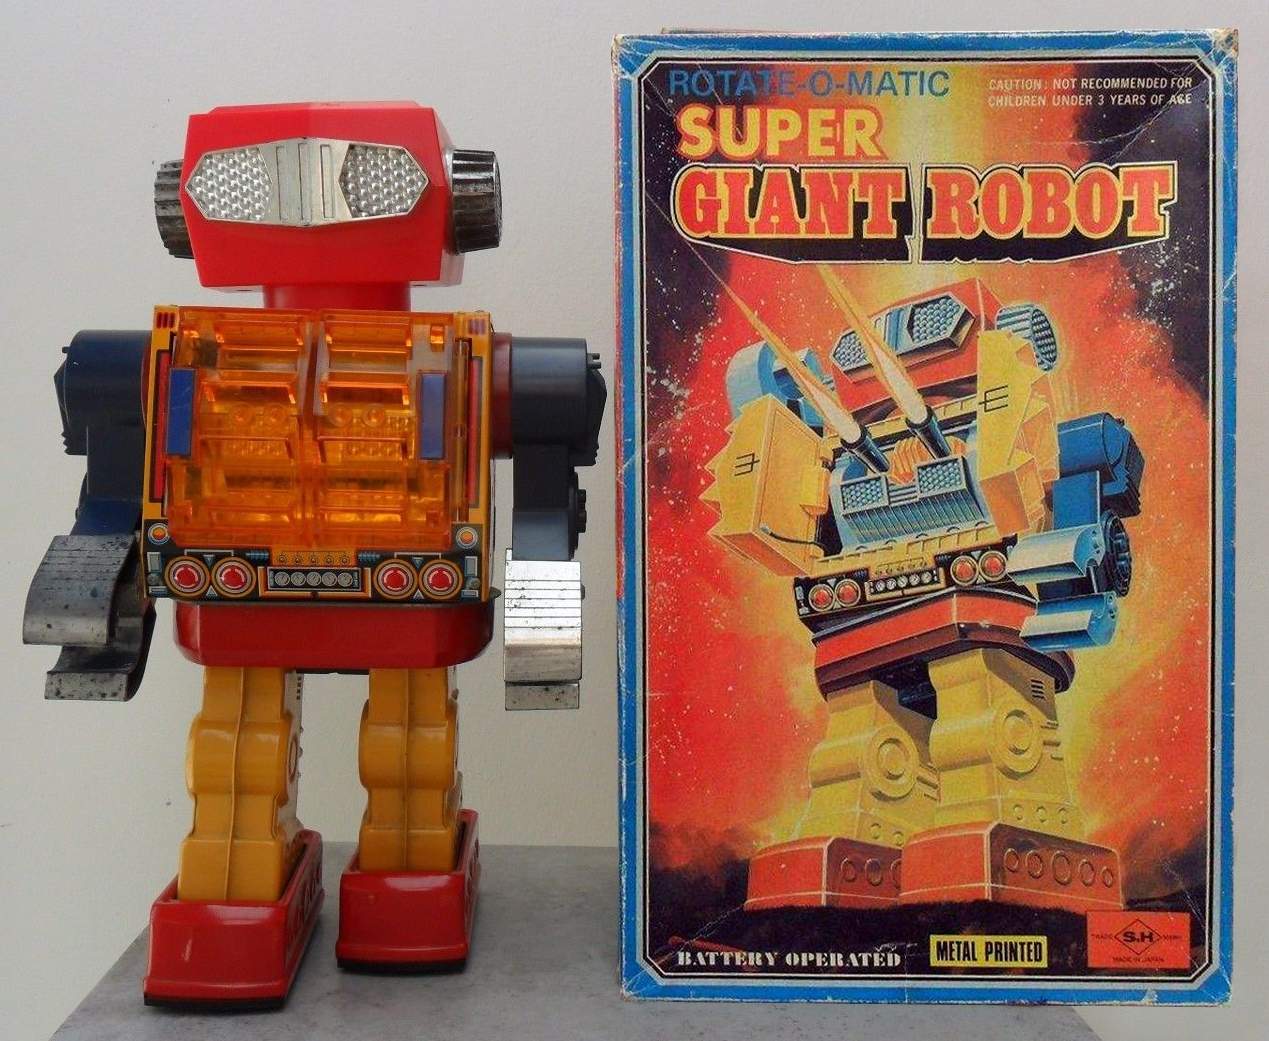 https://www.theoldrobots.com/images106/GiantRobot-1.JPG